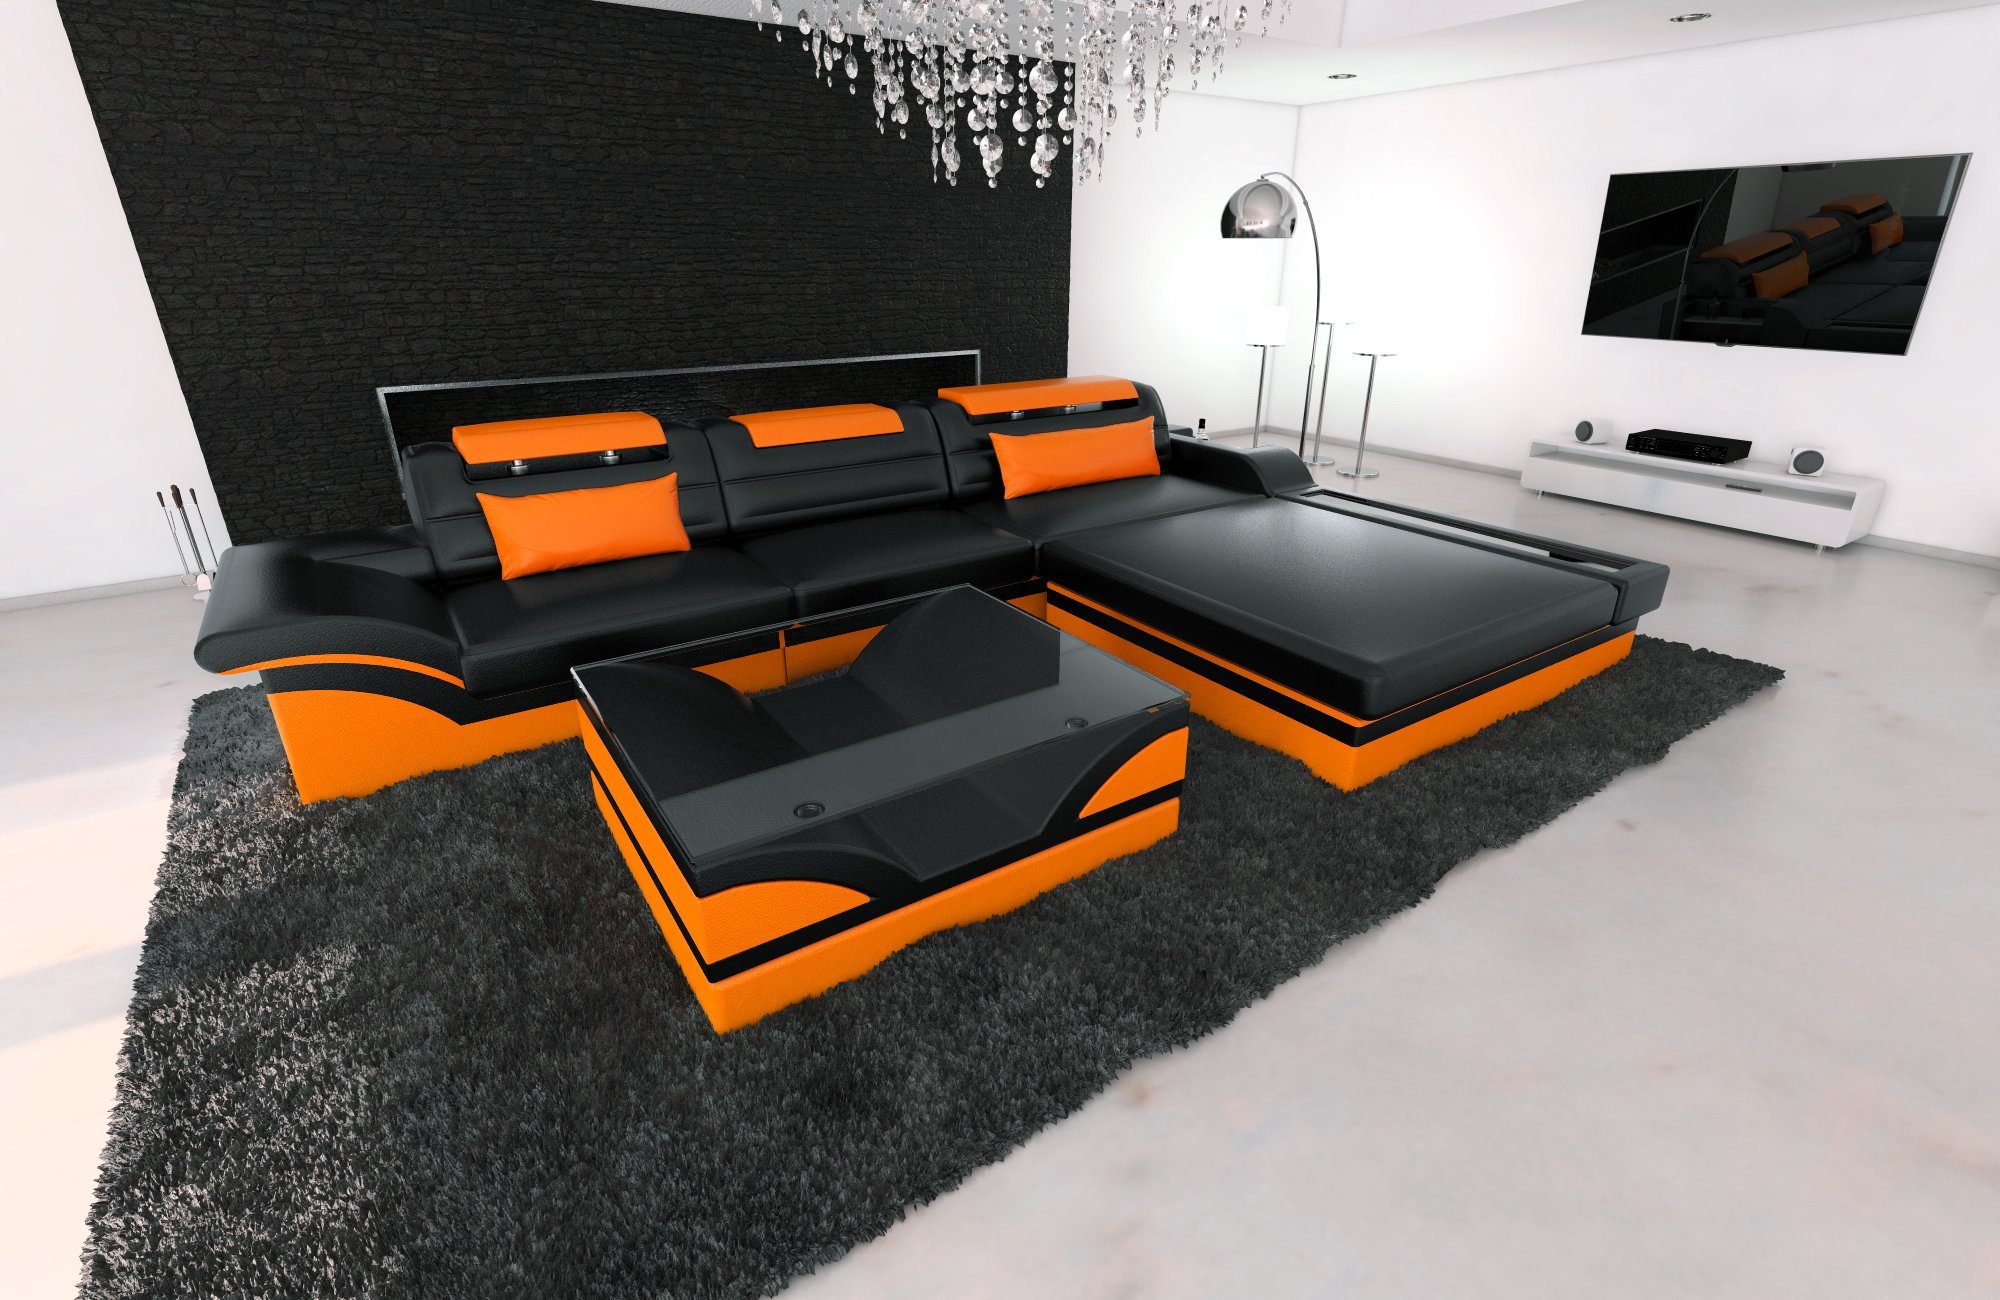 Sofa Dreams Ecksofa Bettfunktion Form Schlafsofa, als Parma Designersofa Ledersofa, LED, L mit wahlweise Couch, Leder mit Sofa Ledercouch